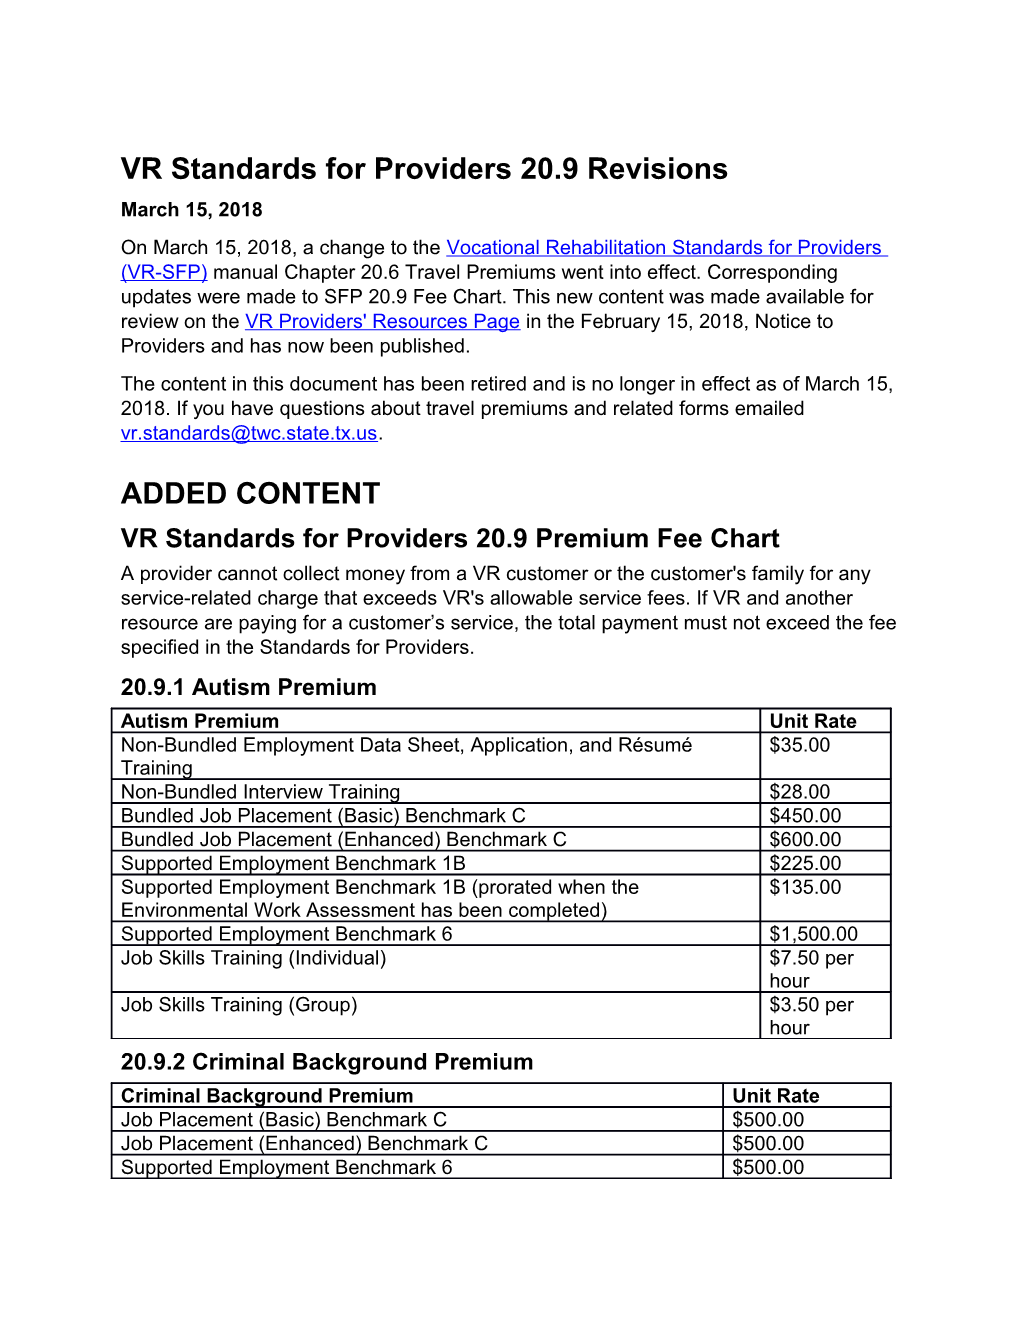 VR-SFP 20.9 Premium Fee Chart Revised 031518